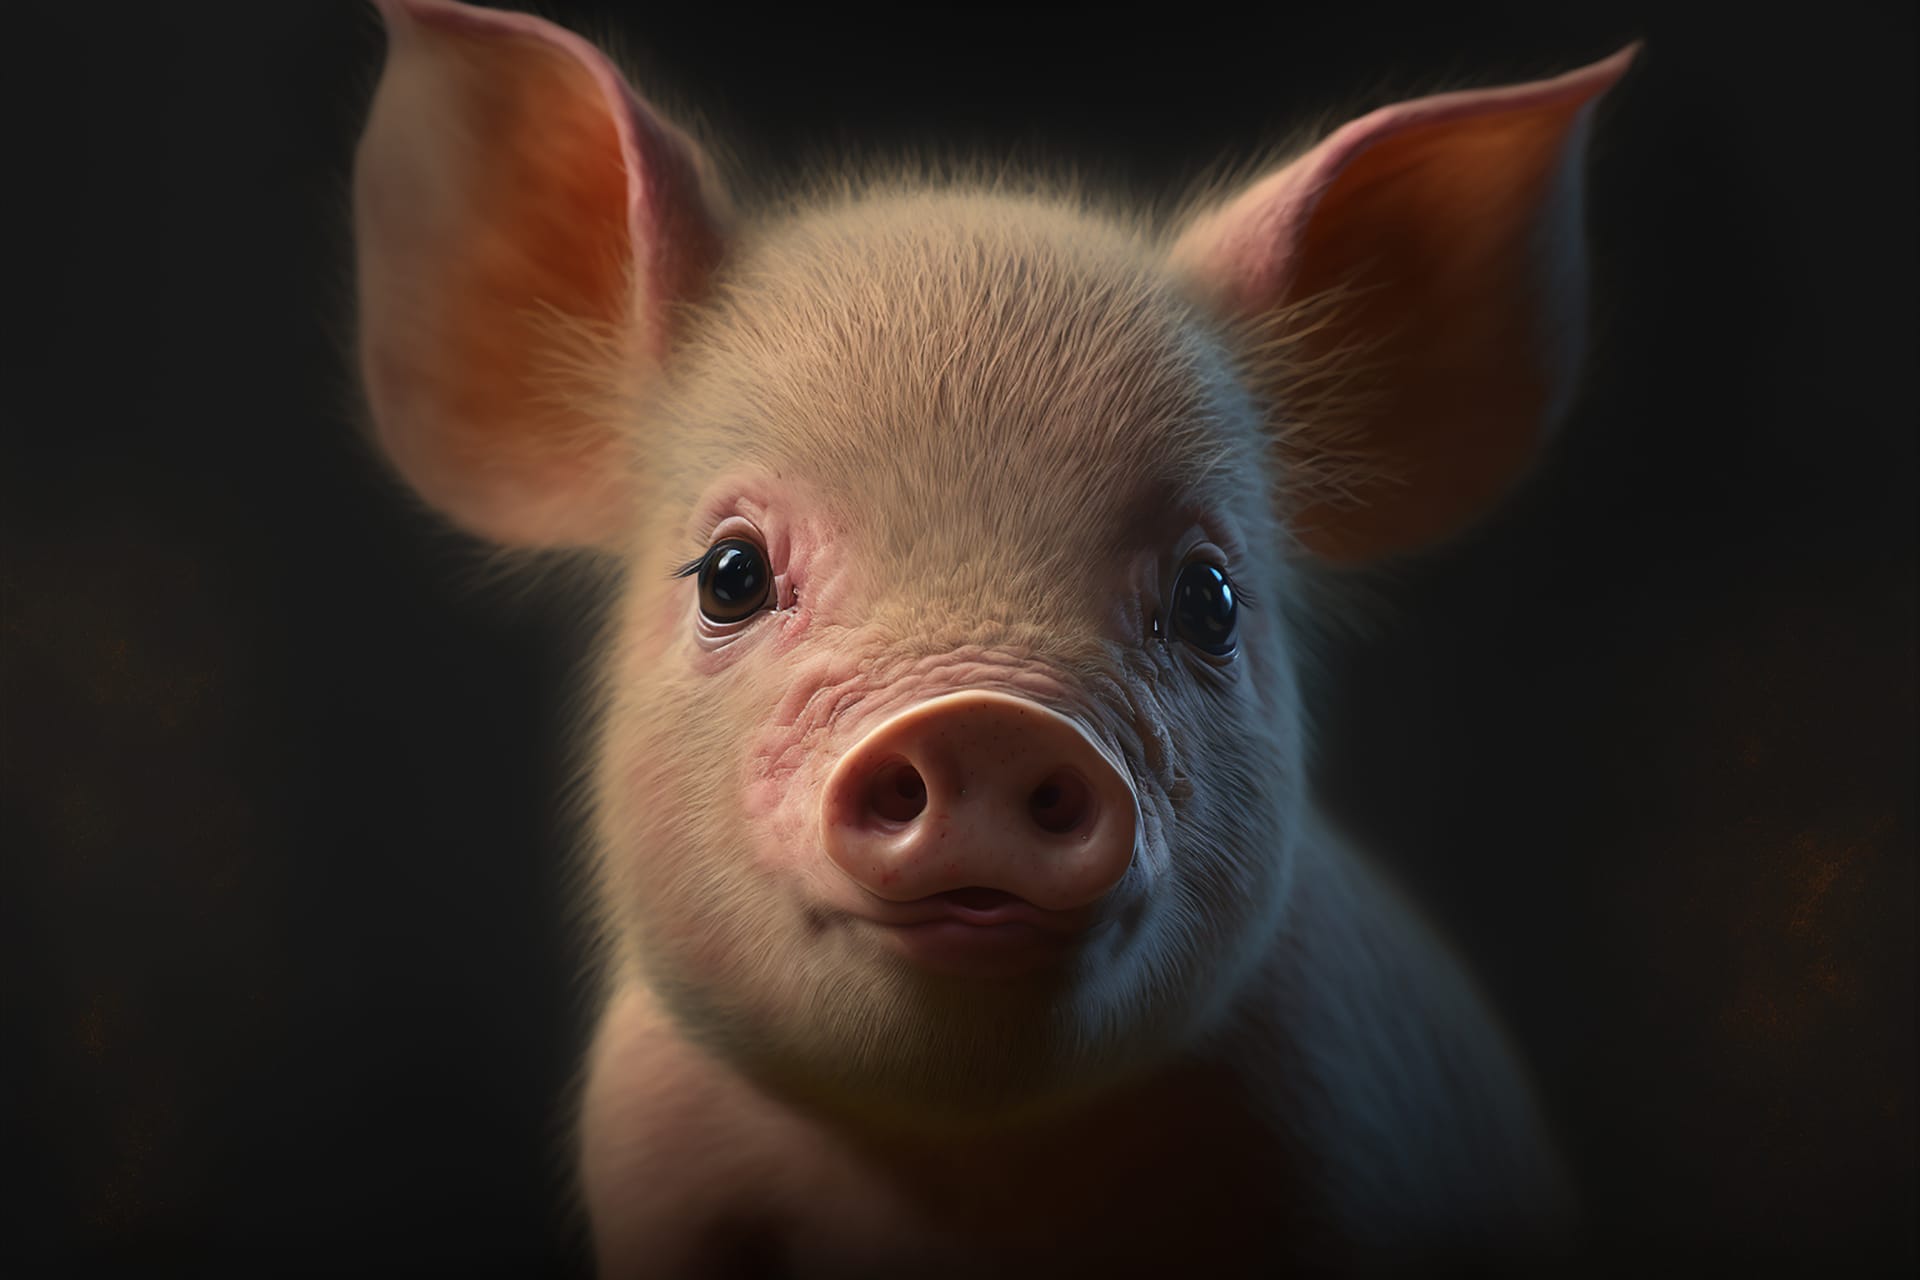 Portrait cute pig picture animal photo